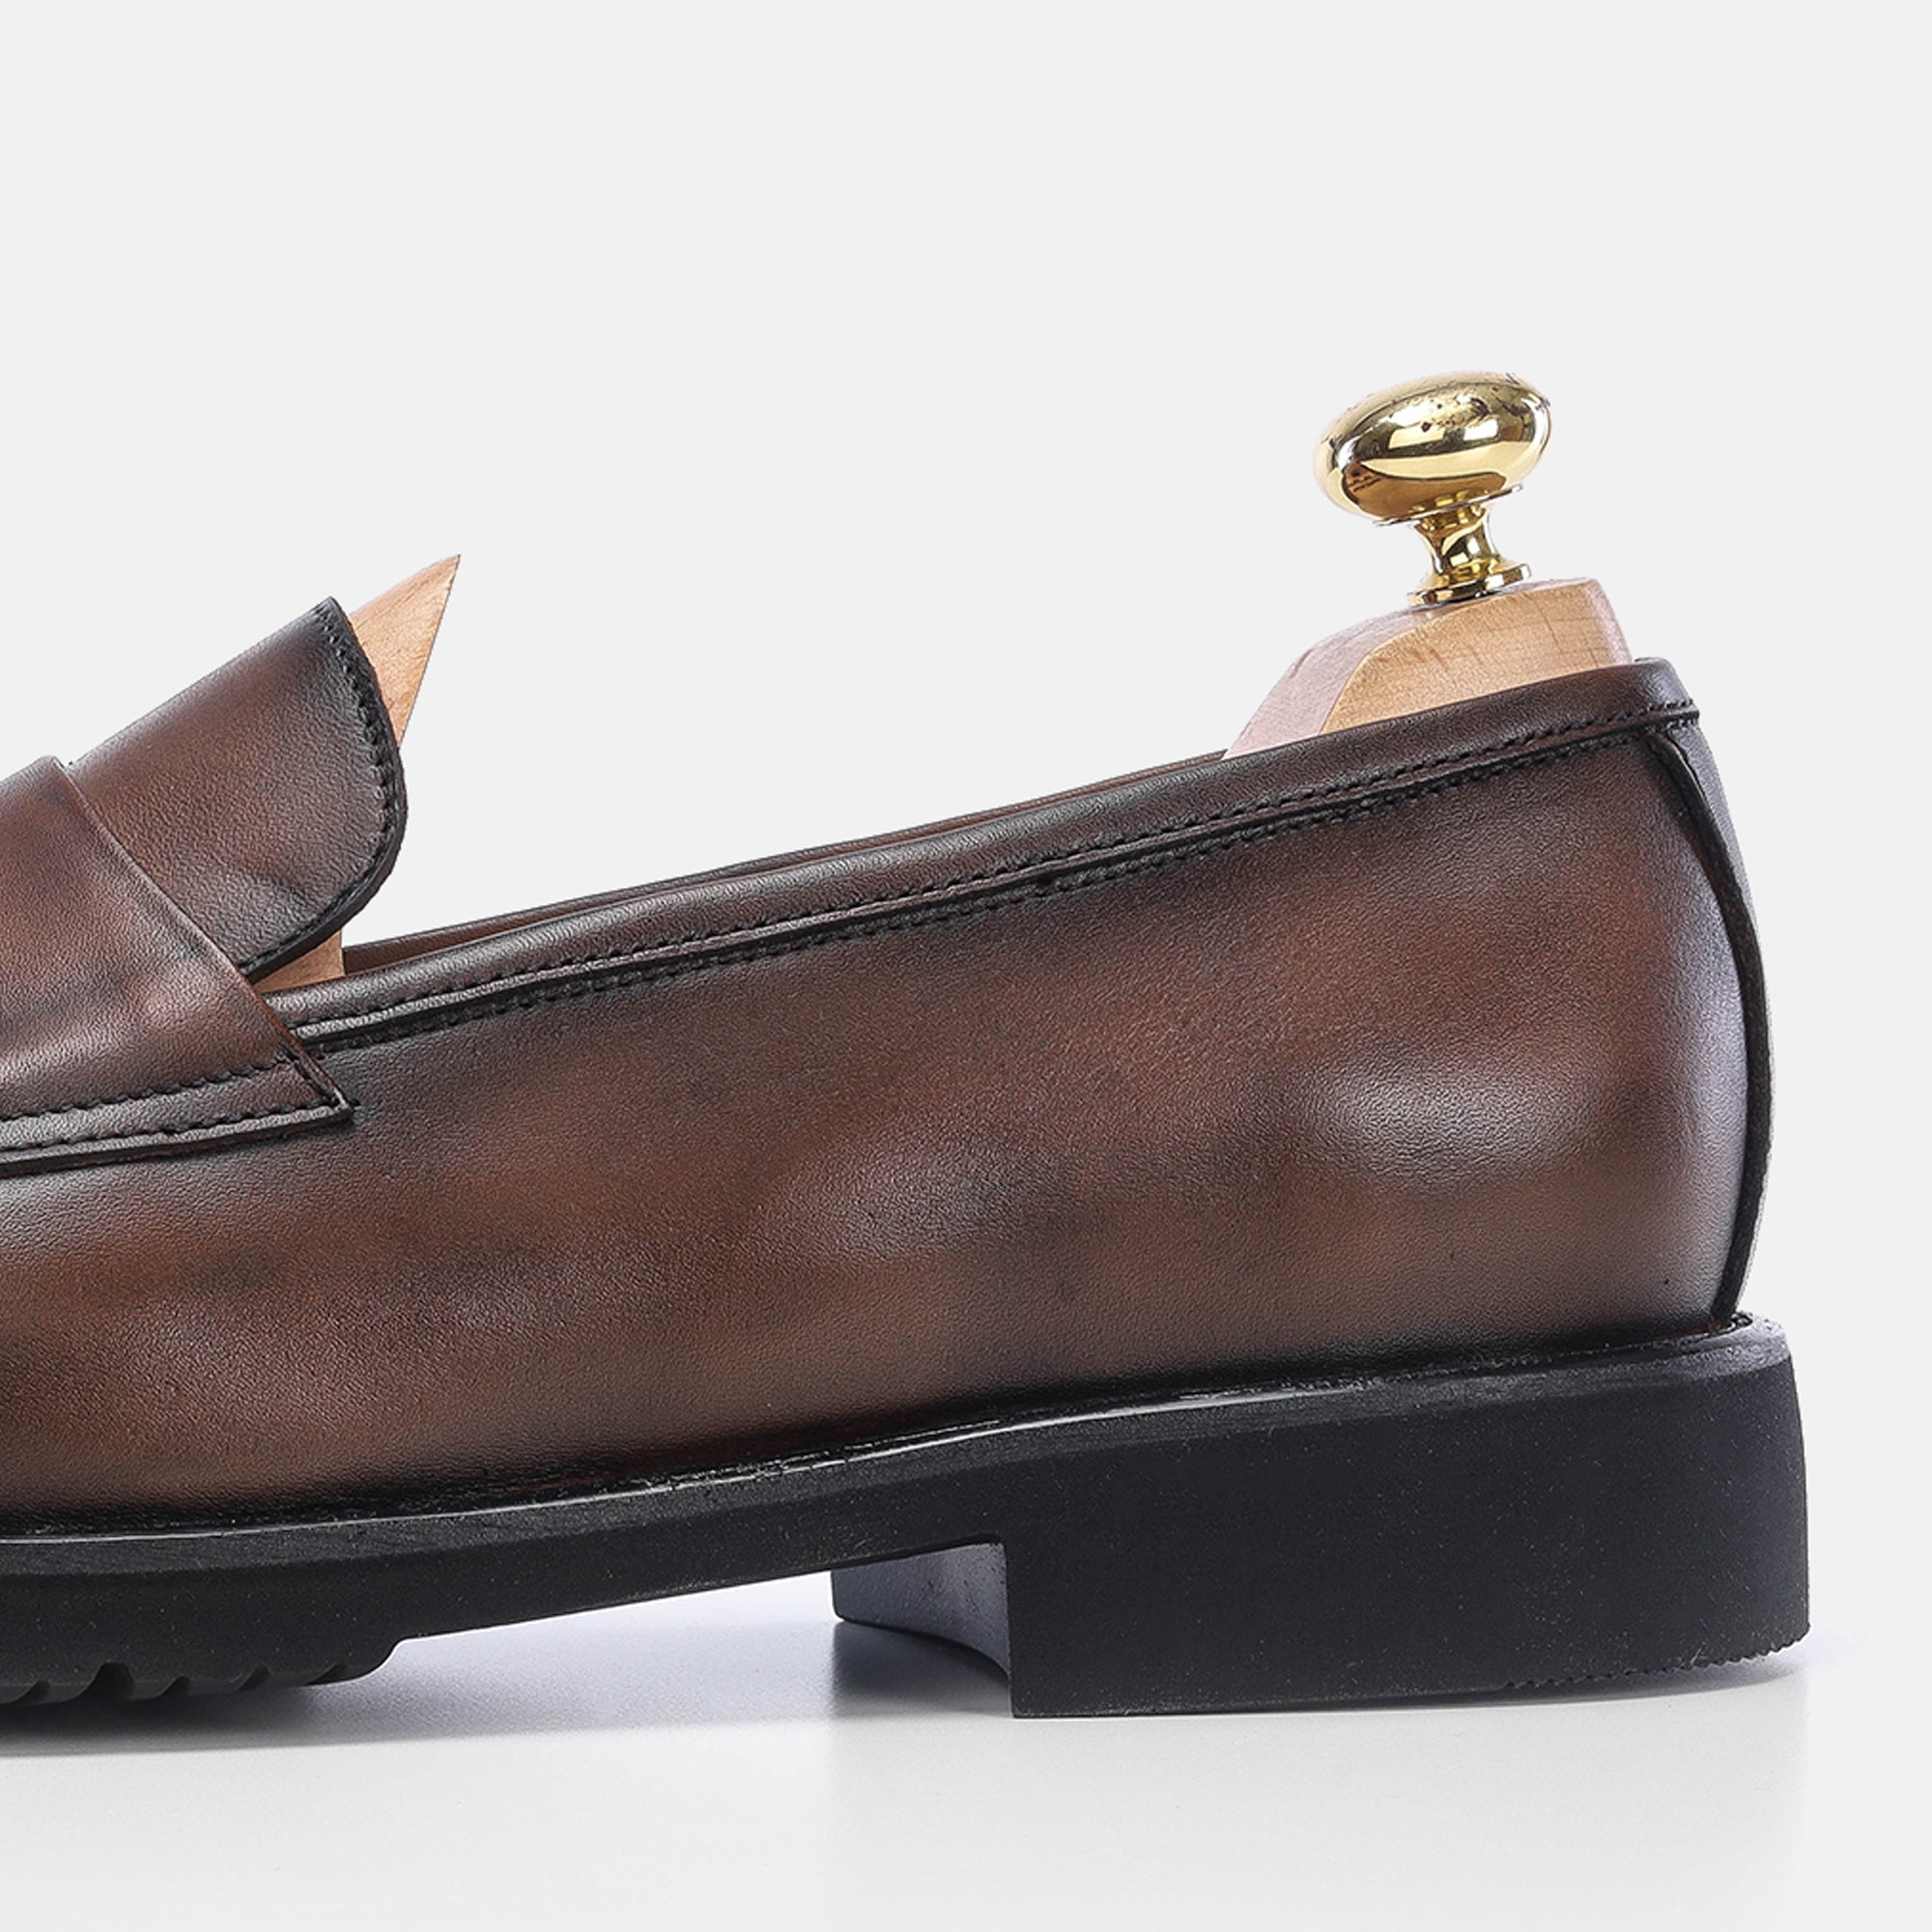 '''5162 chaussure cuir marron vintage